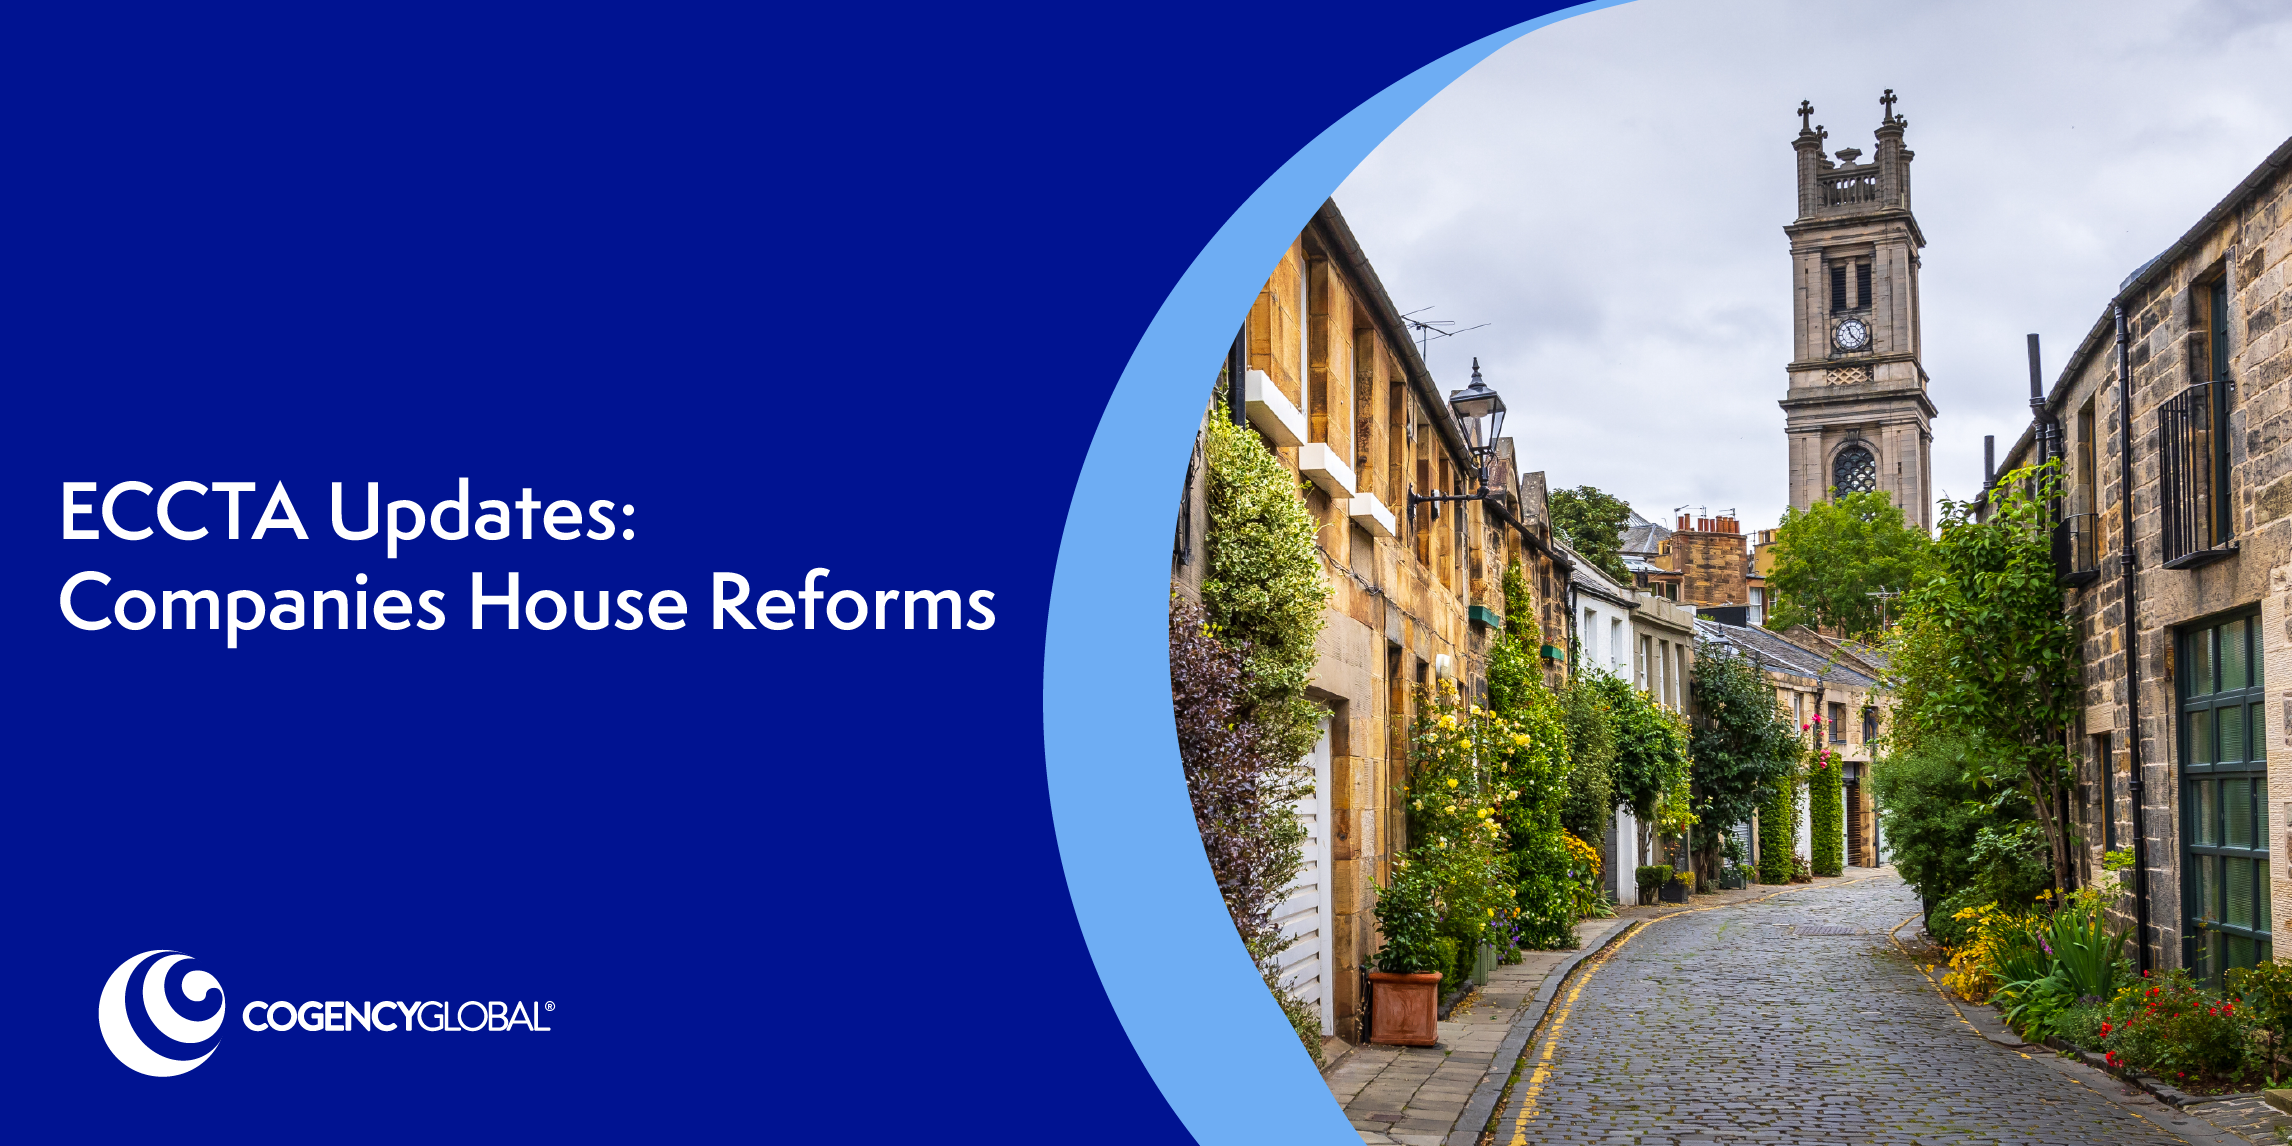 ECCTA Updates: Companies House Reforms